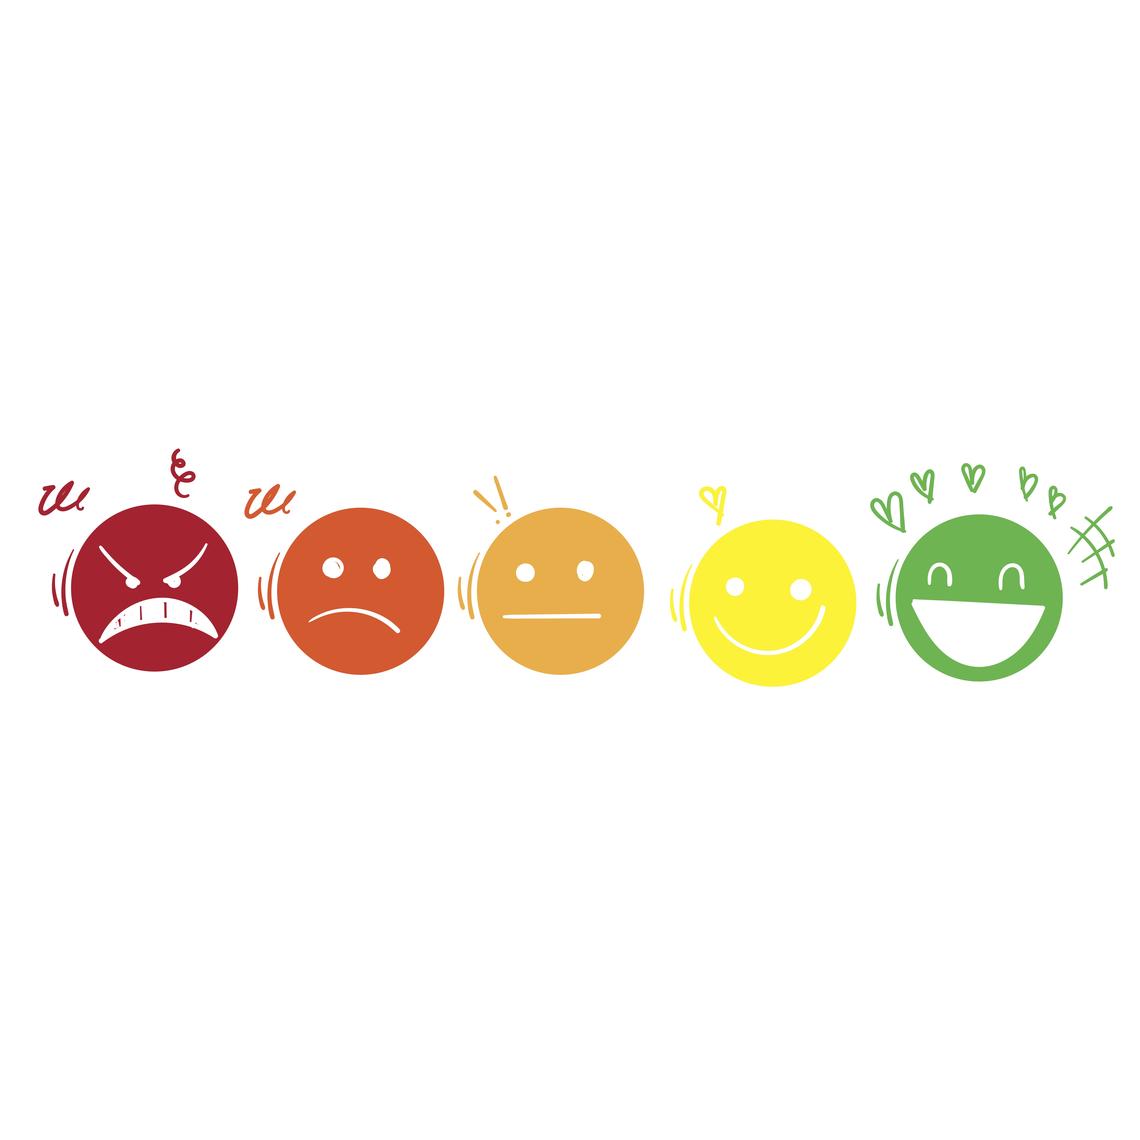 A series of reaction emojis